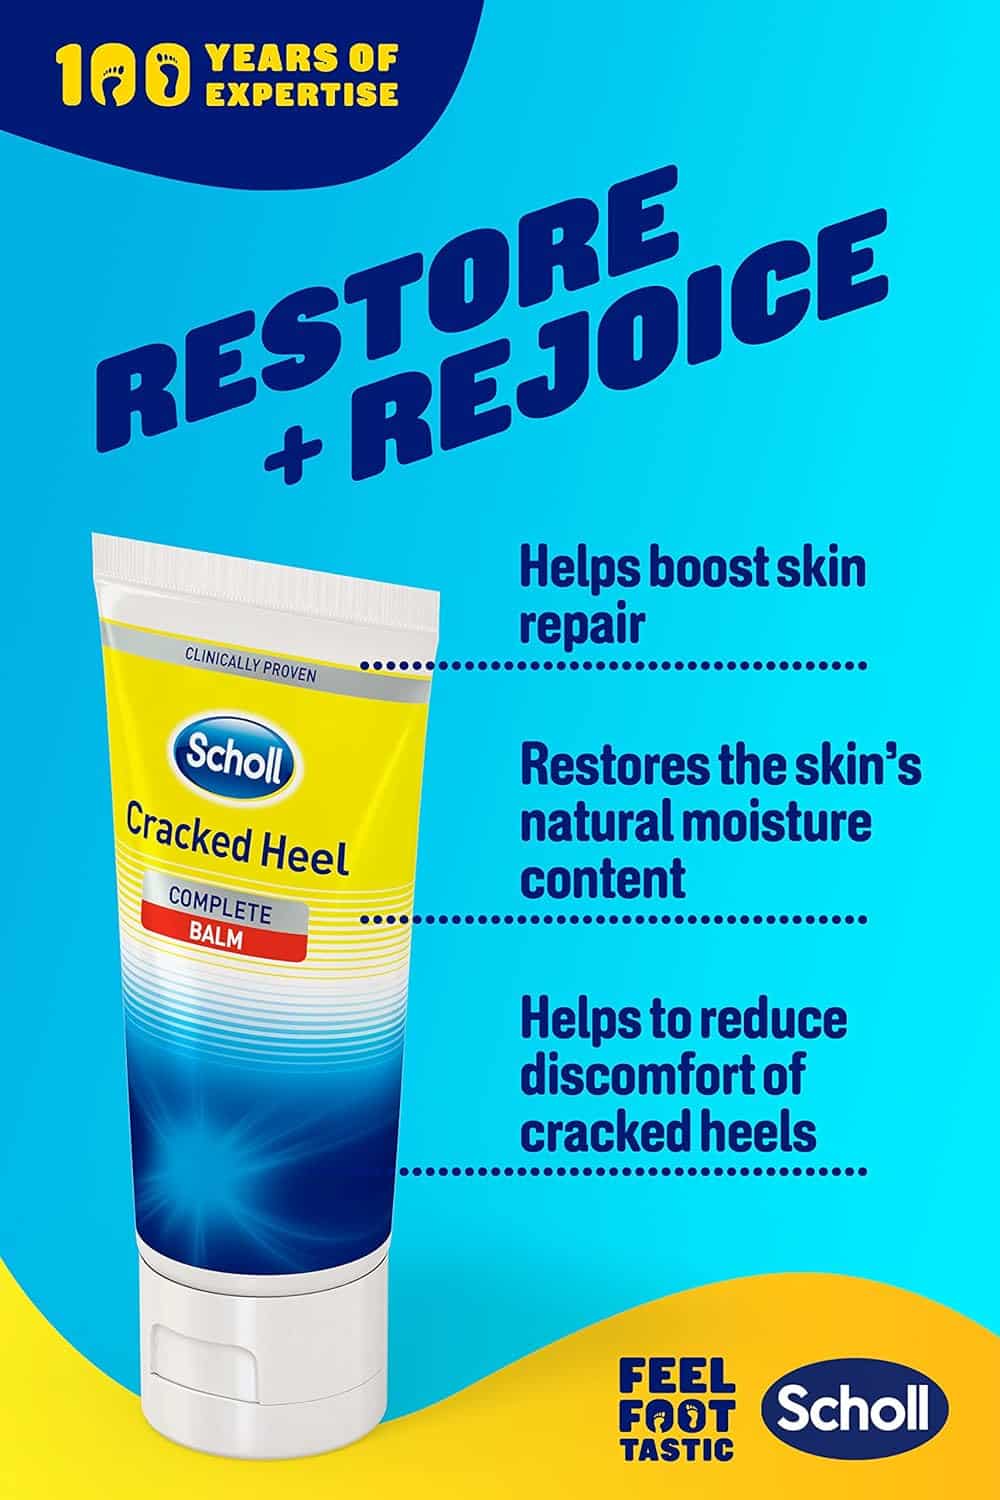 Scholl Cracked Heel Repair Moisturizing Cream Active Repair K+-28710